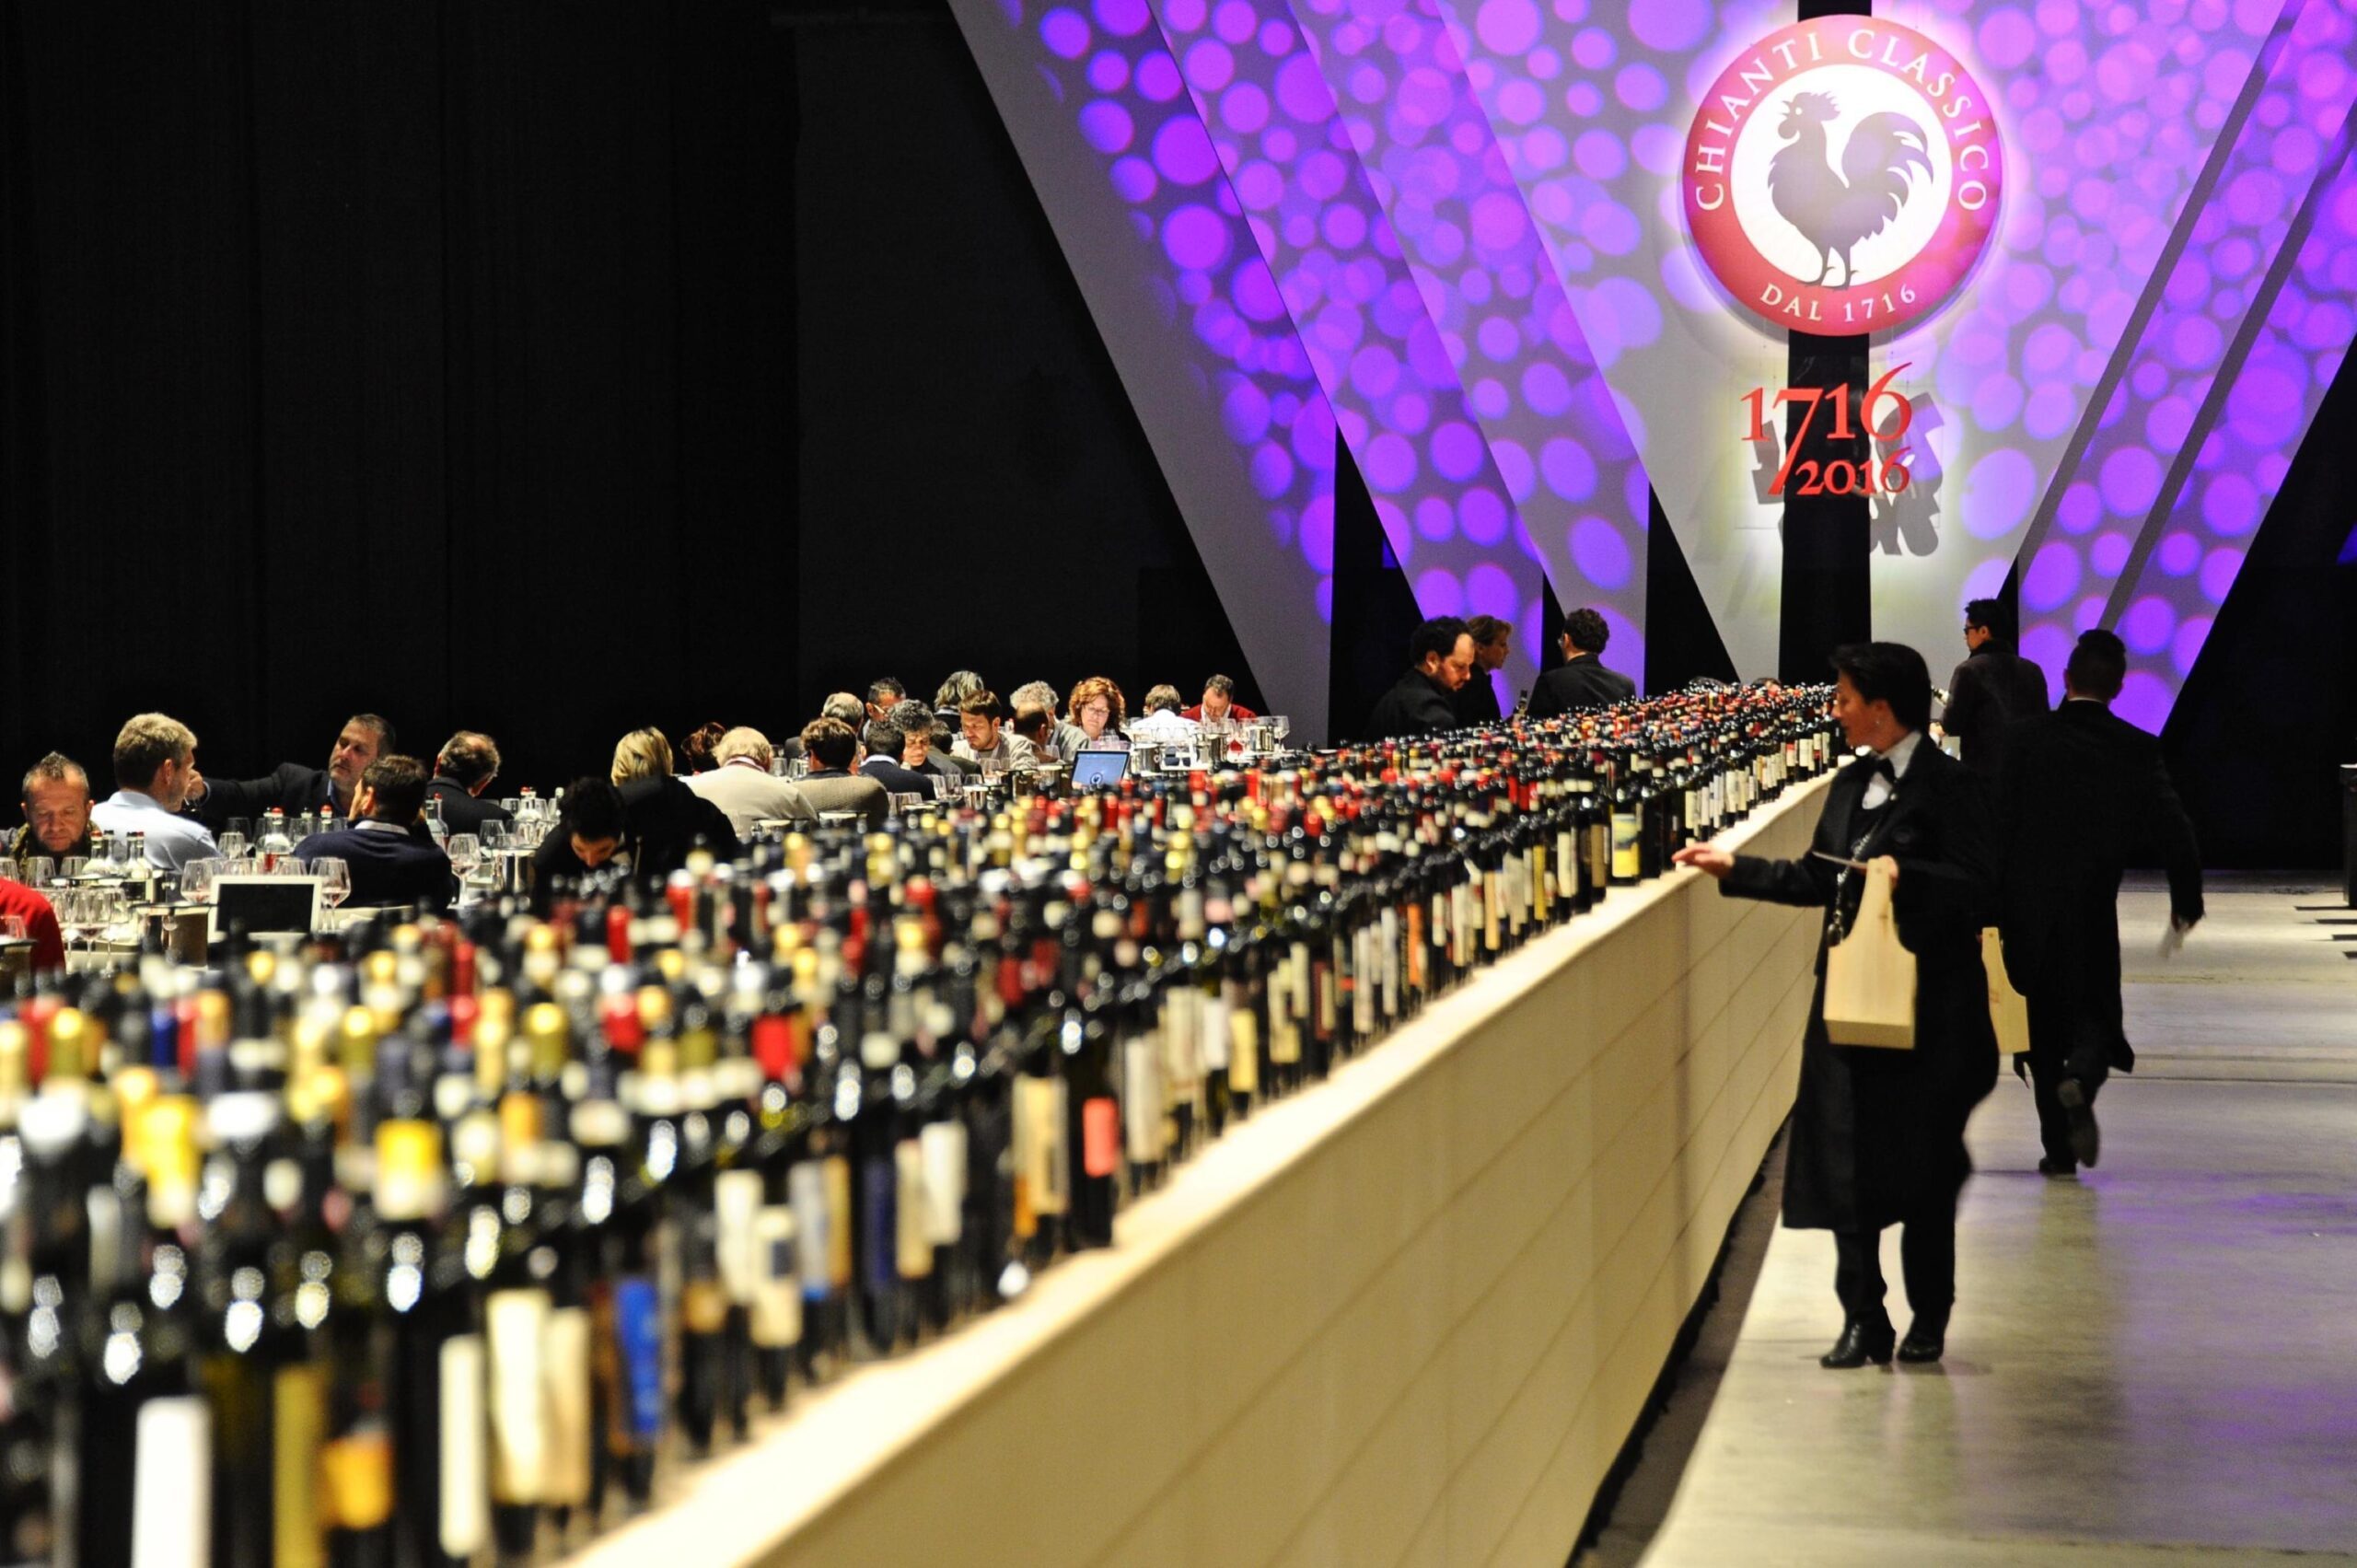 Italy global wine market king – study